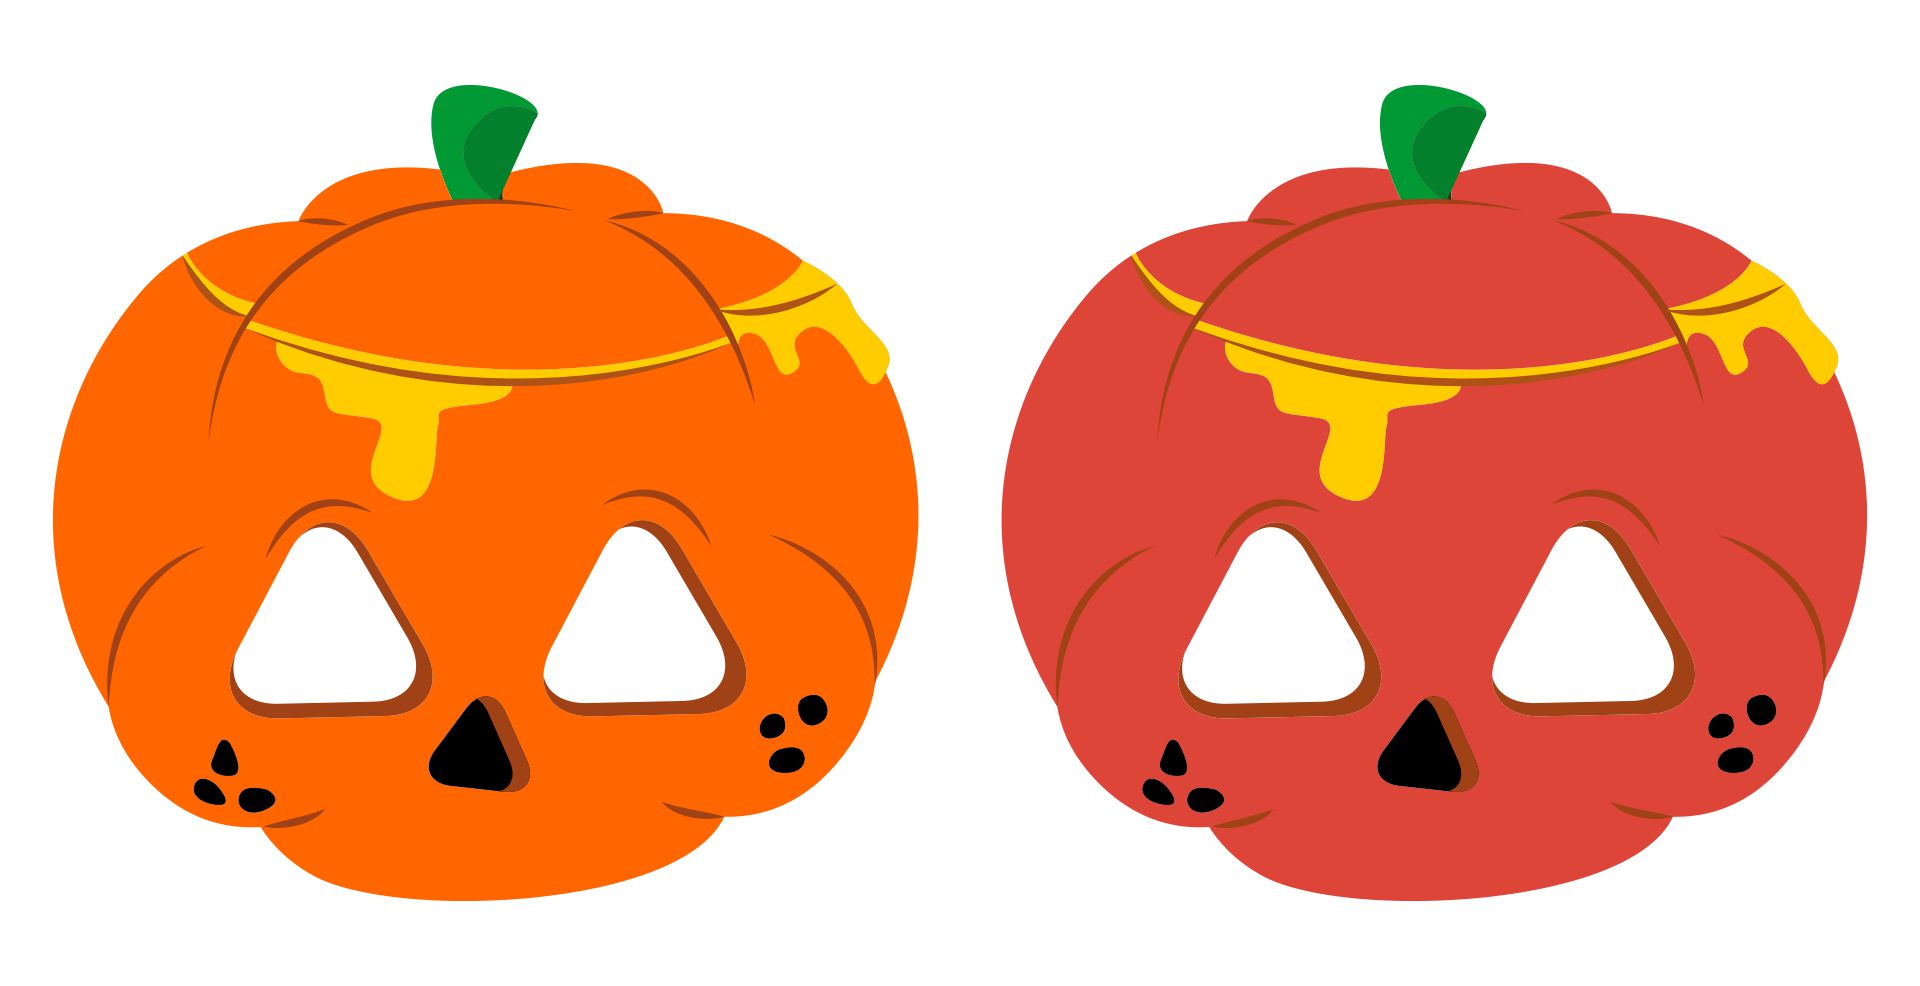 Pumpkin Halloween Mask Templates Printable